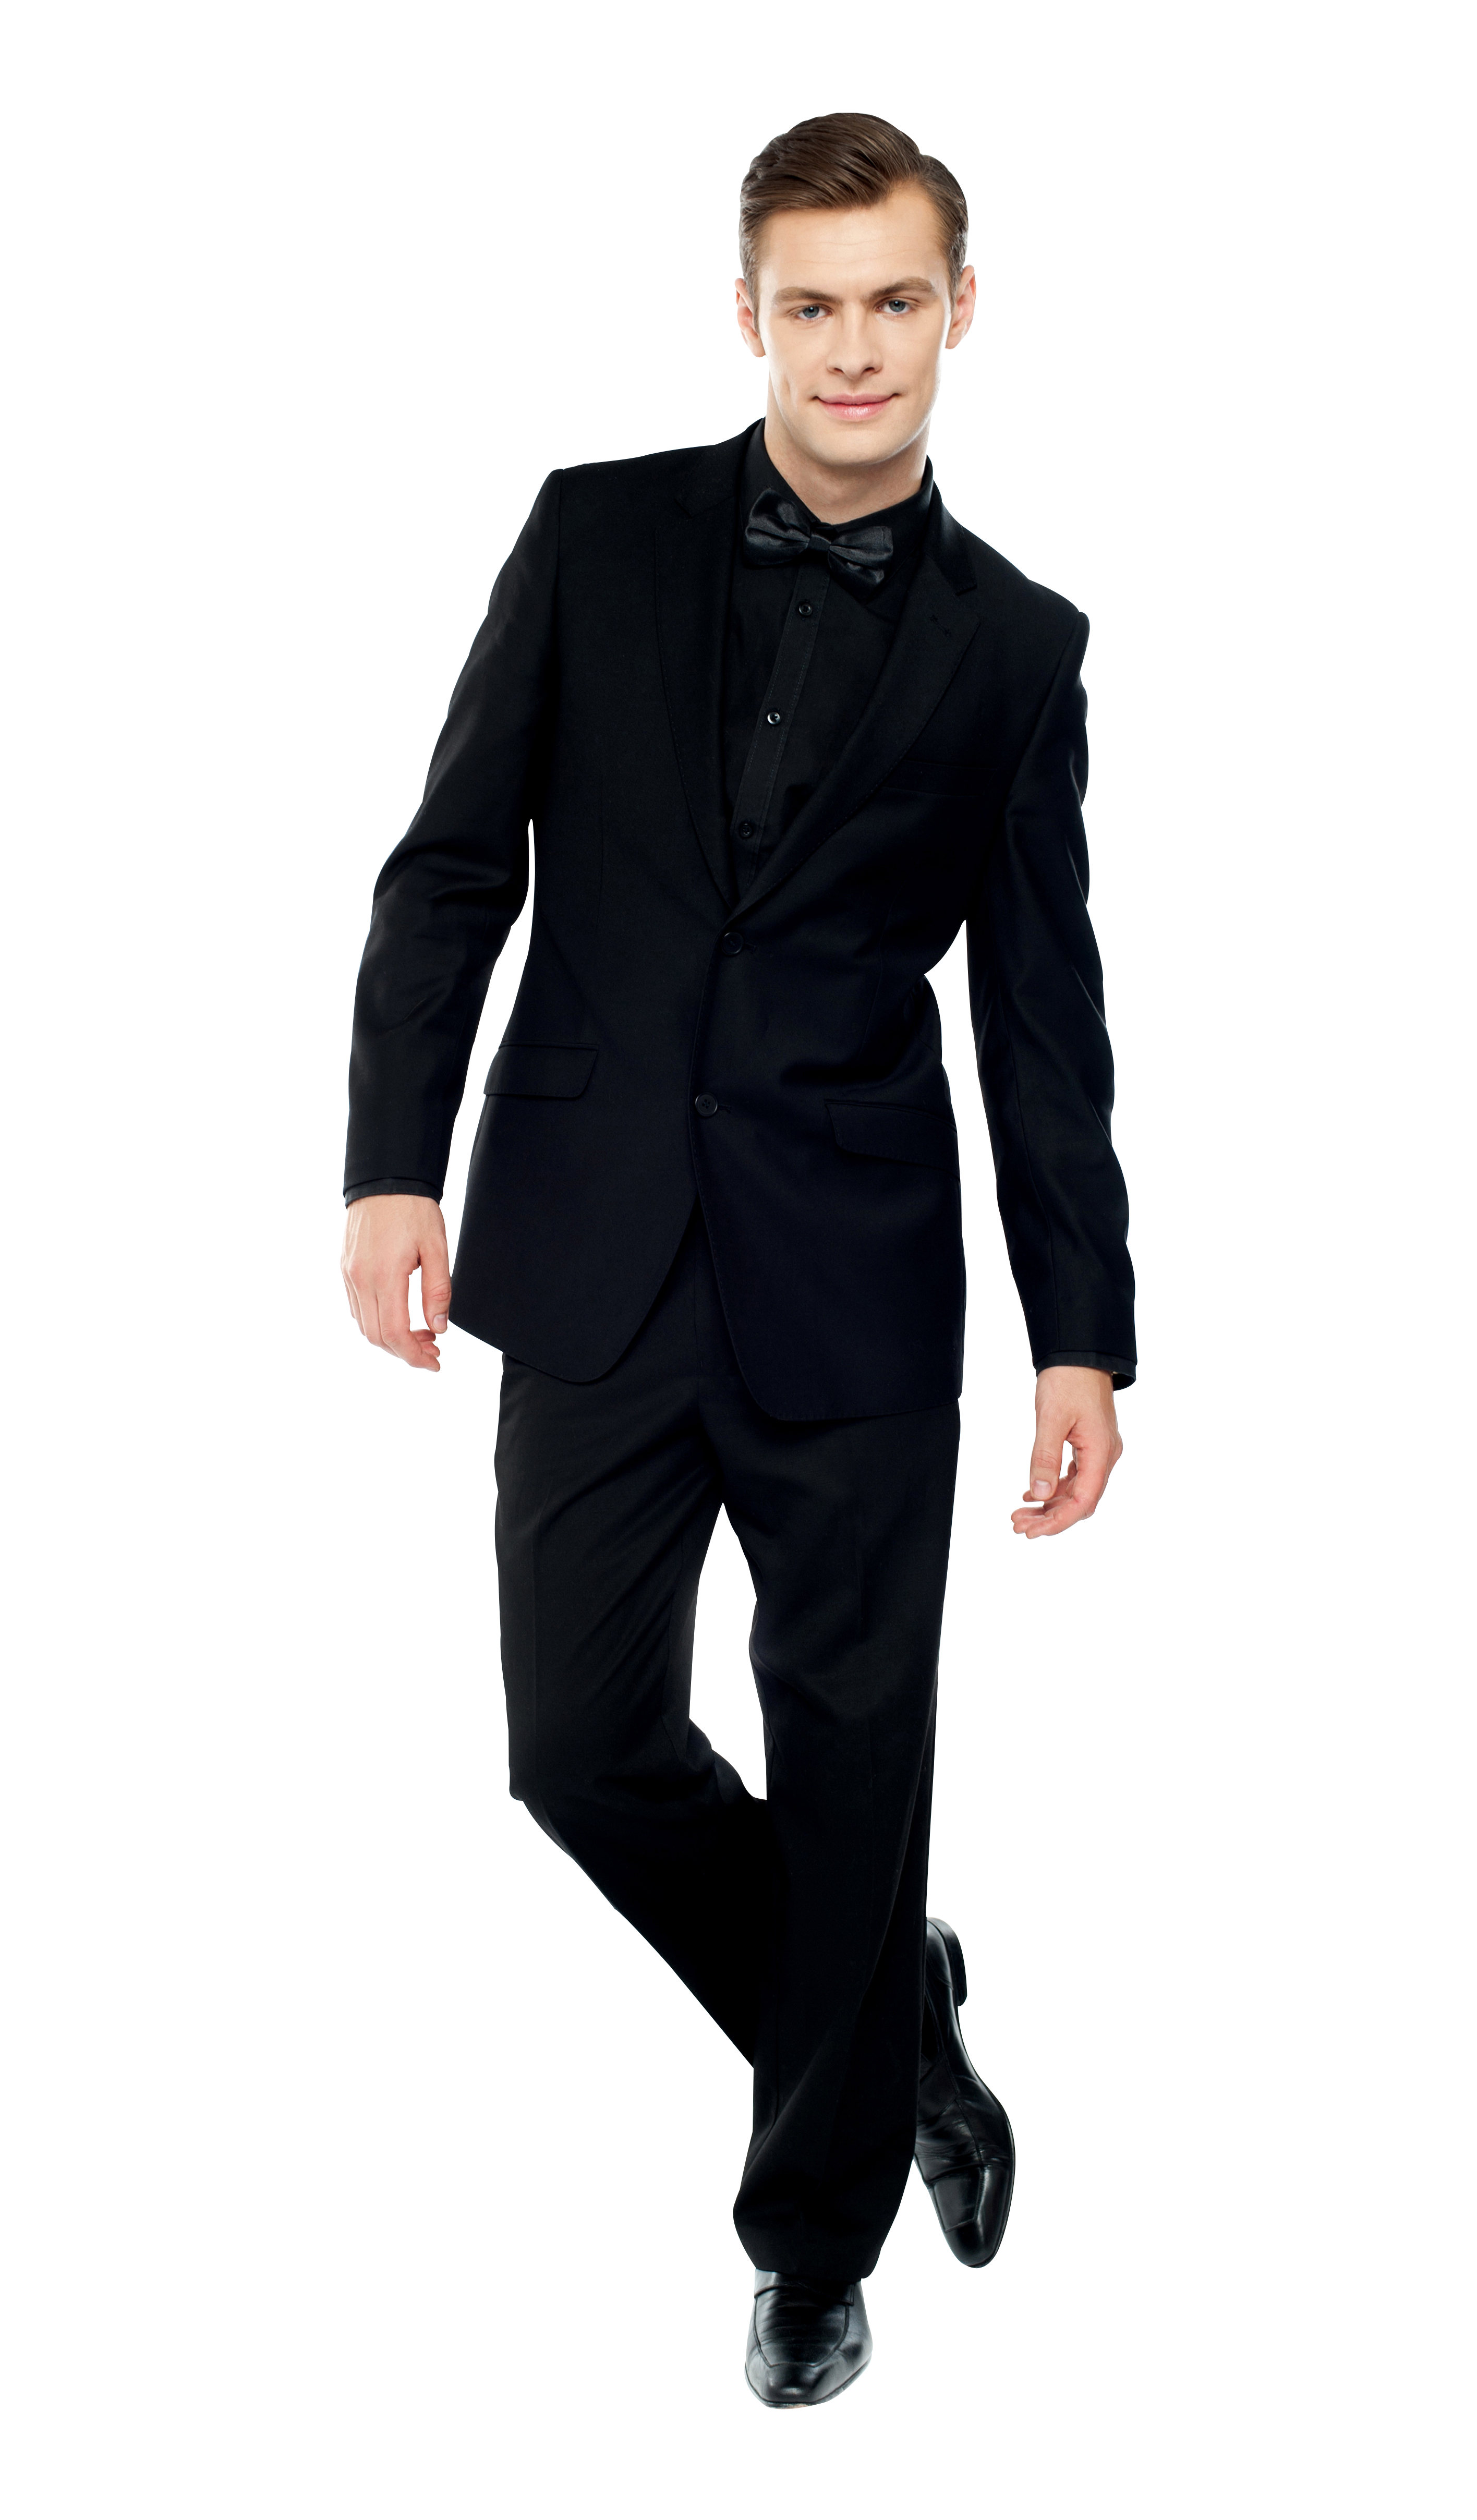 Model Man Black Suit Transparent Background